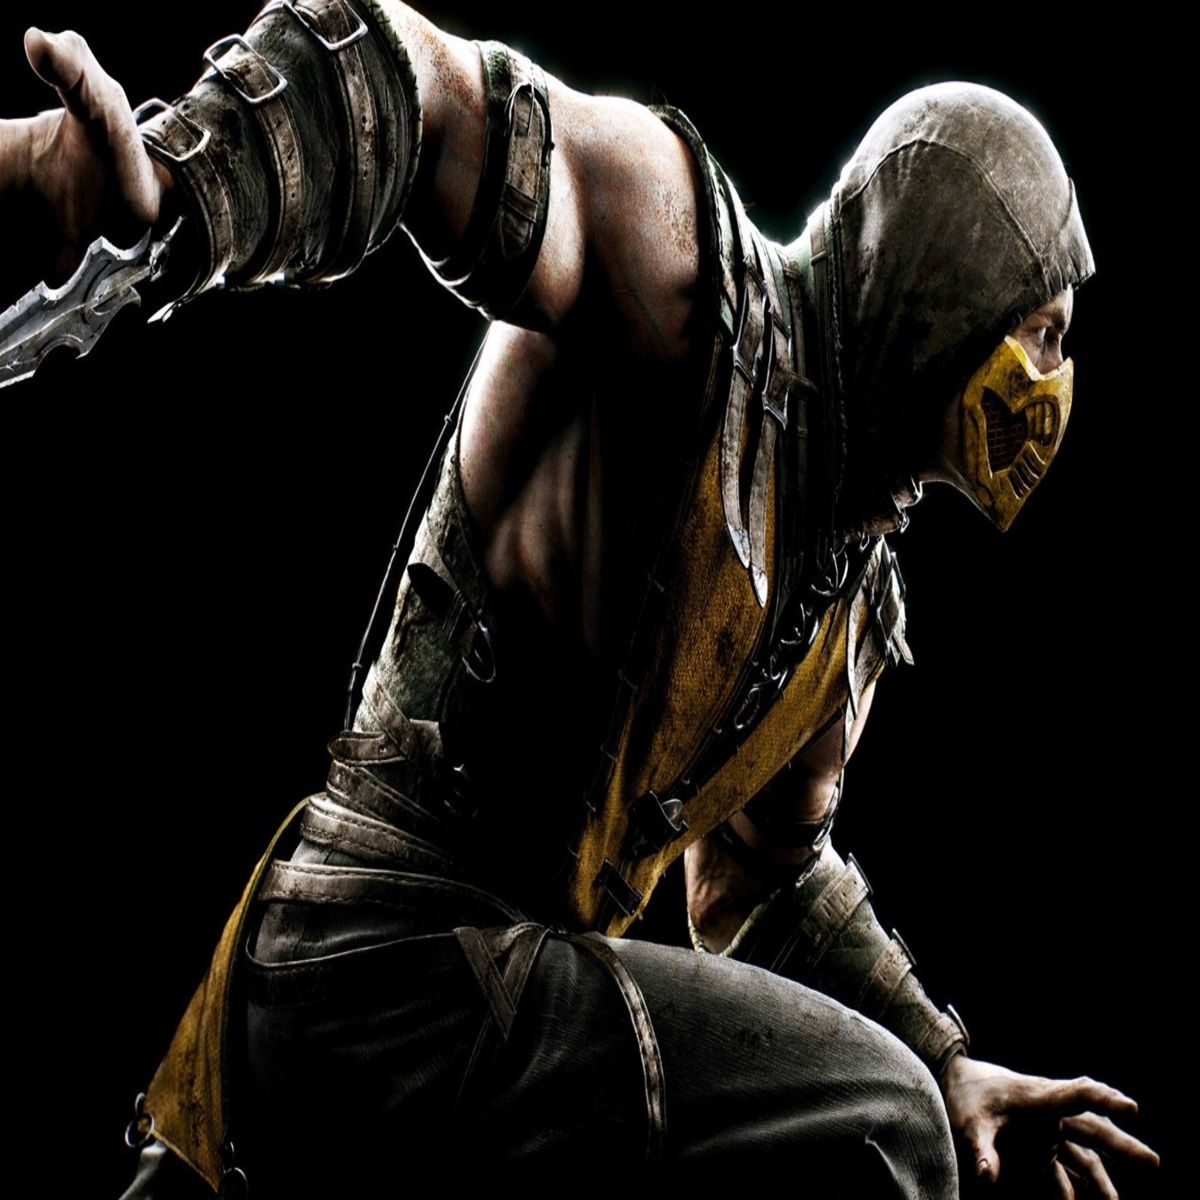 Mortal Kombat 1 Metacritic - i voti delle recensioni